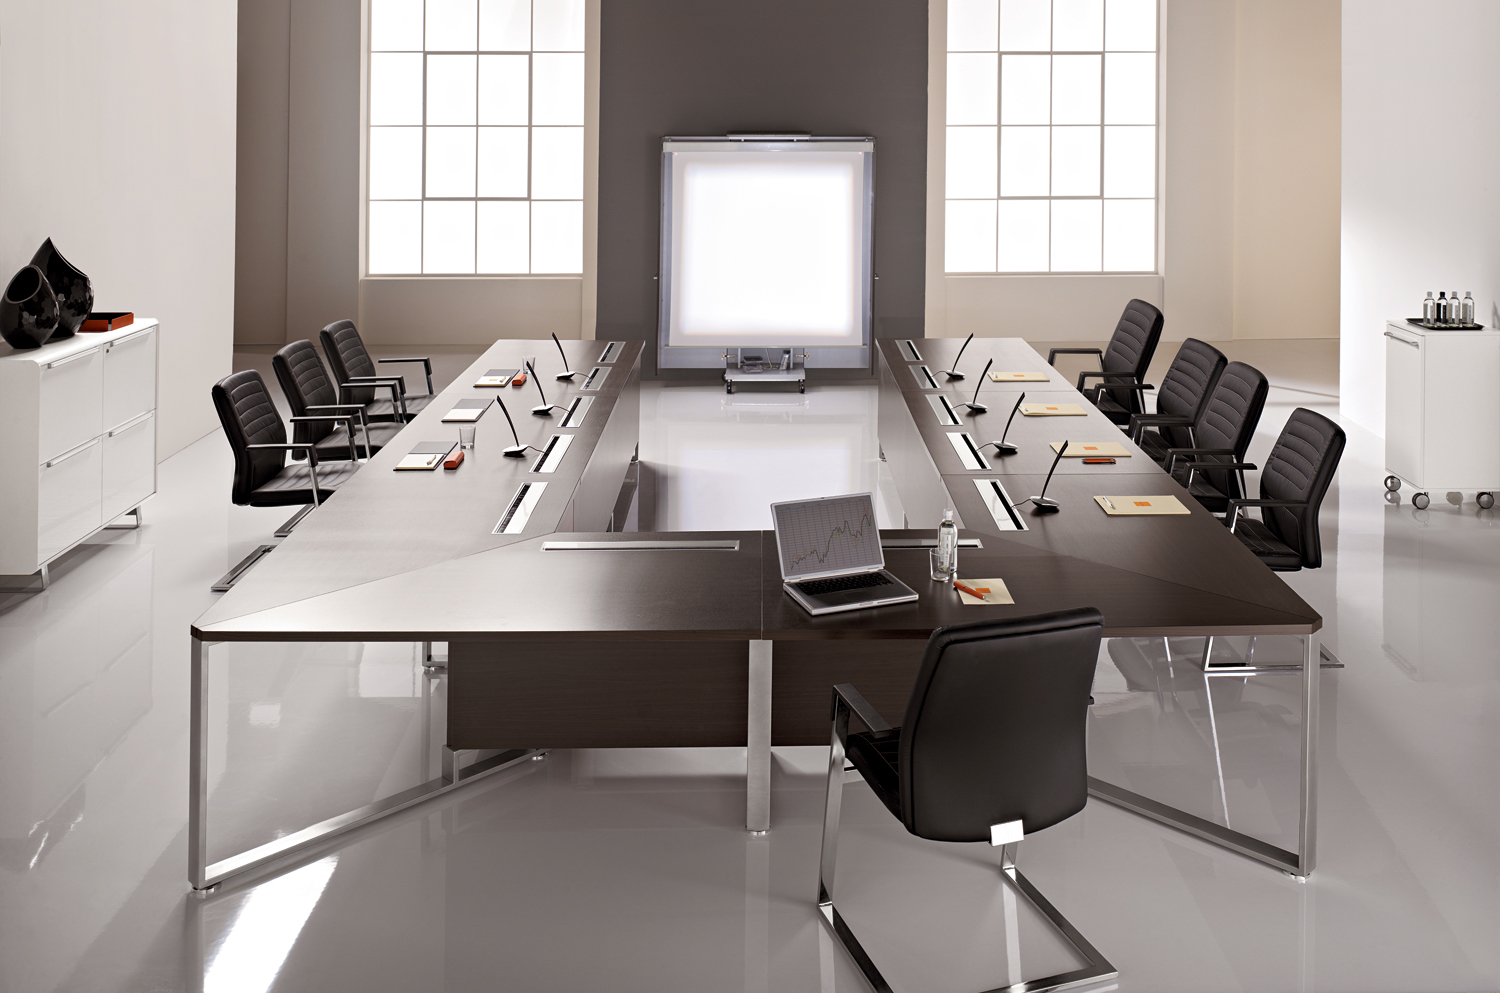 Зоны переговоров. Стол для переговоров ITABLE производитель. Стол для совещаний. Стол в переговорную комнату. Столы для конференц залов.